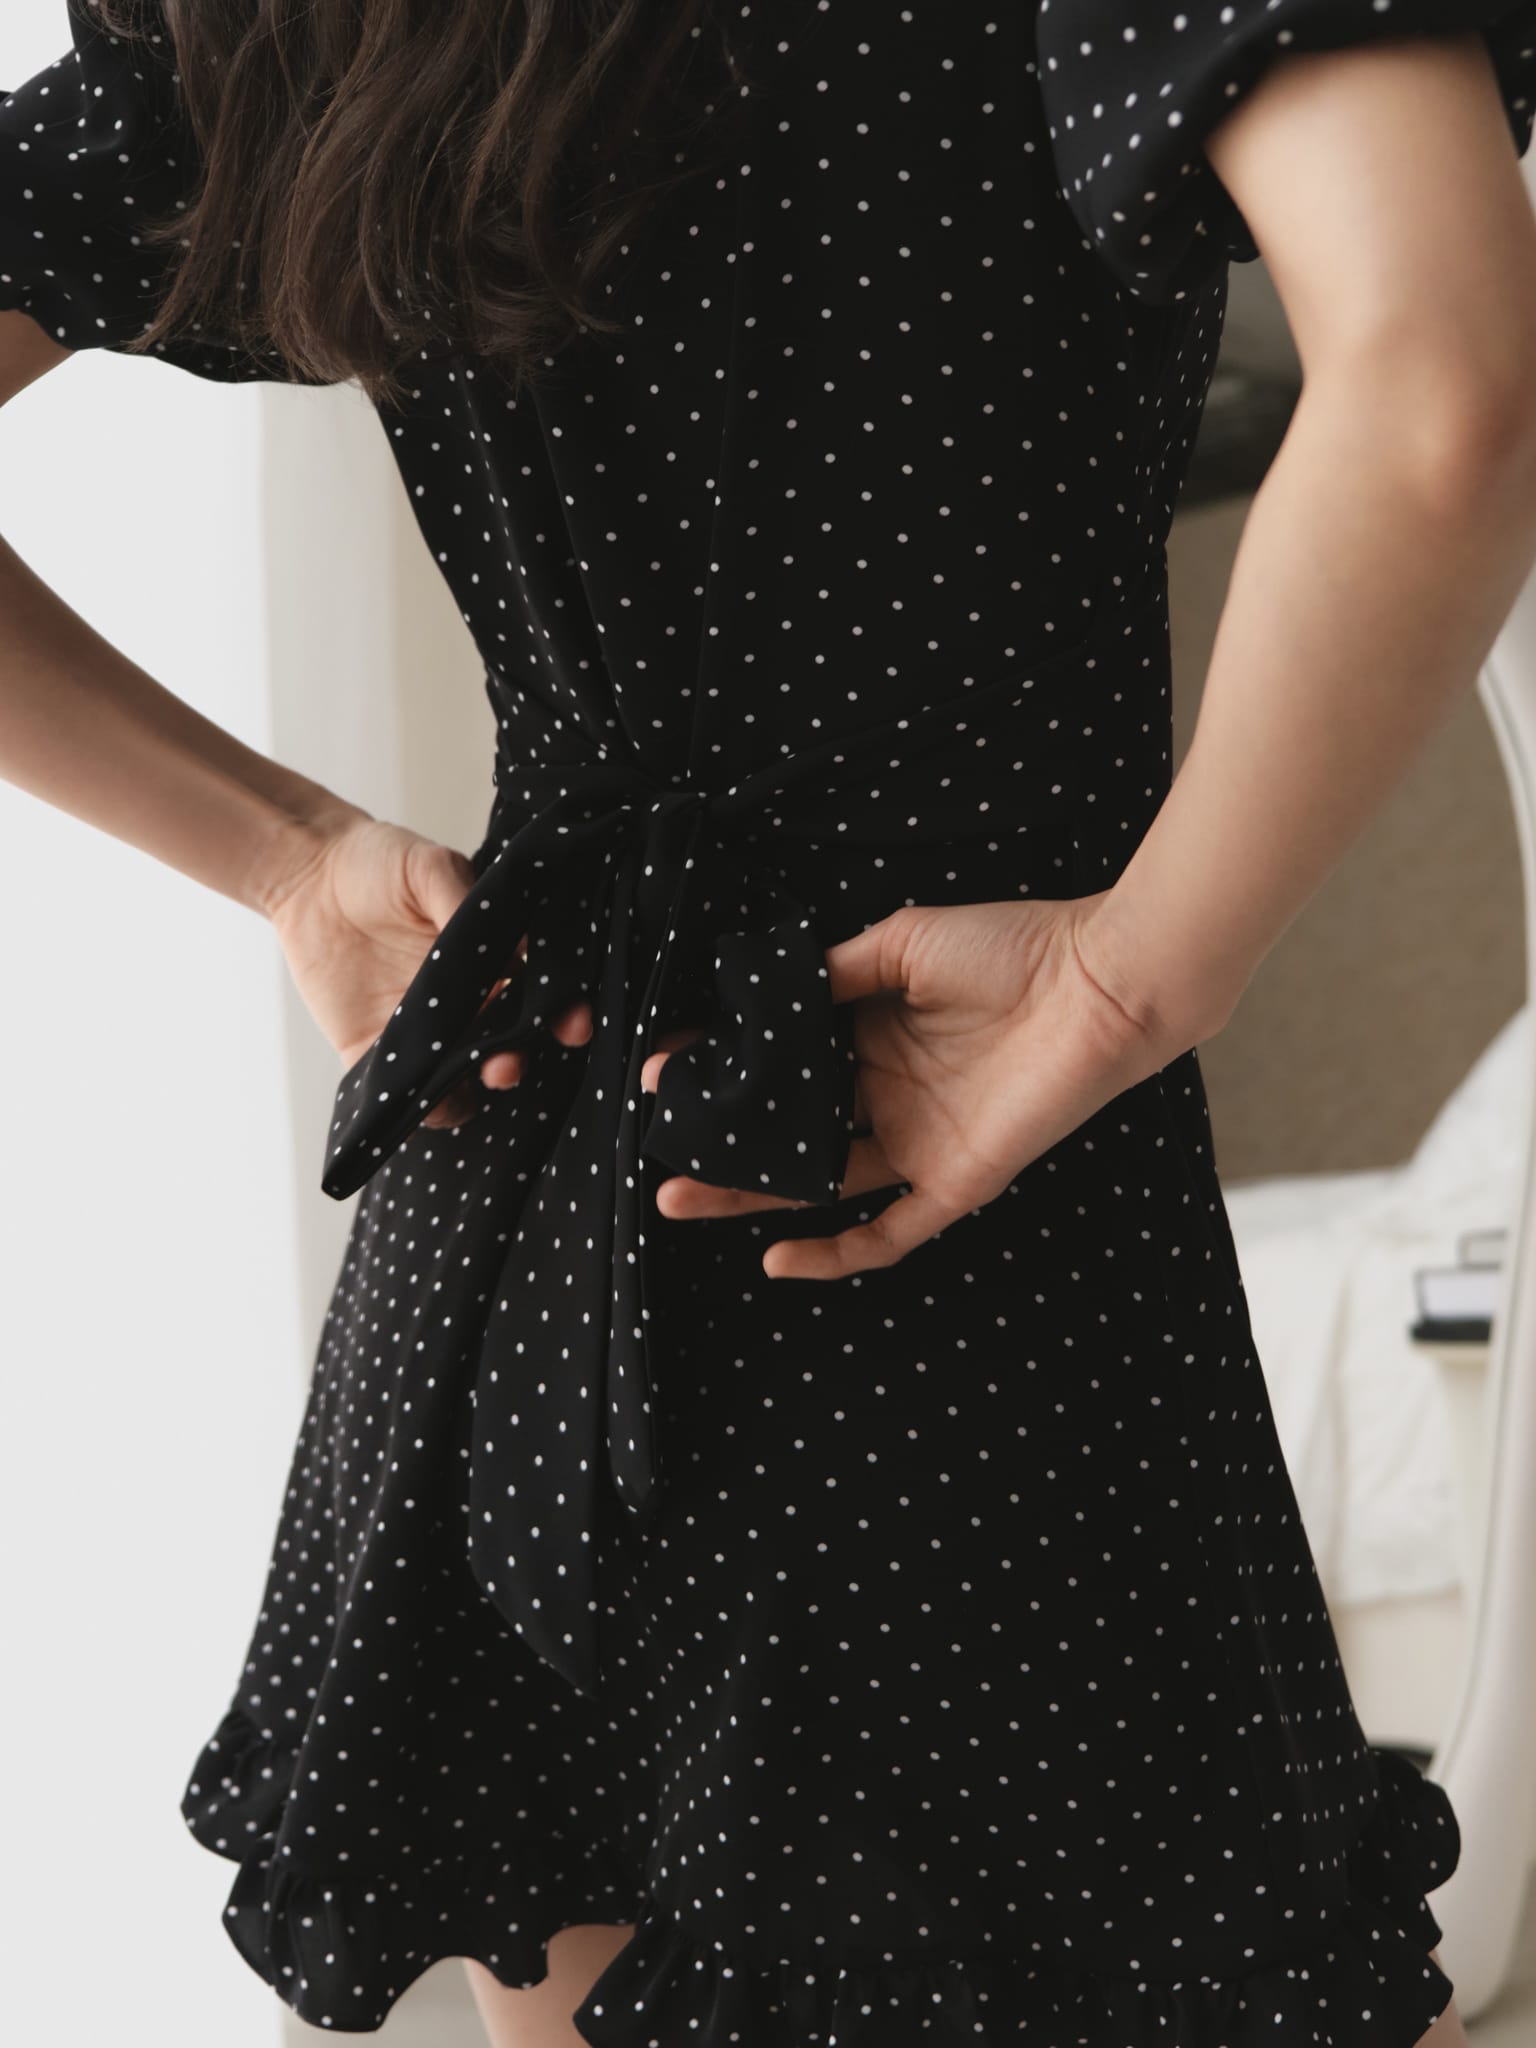 Mini polka-dot dress with contrasting flower